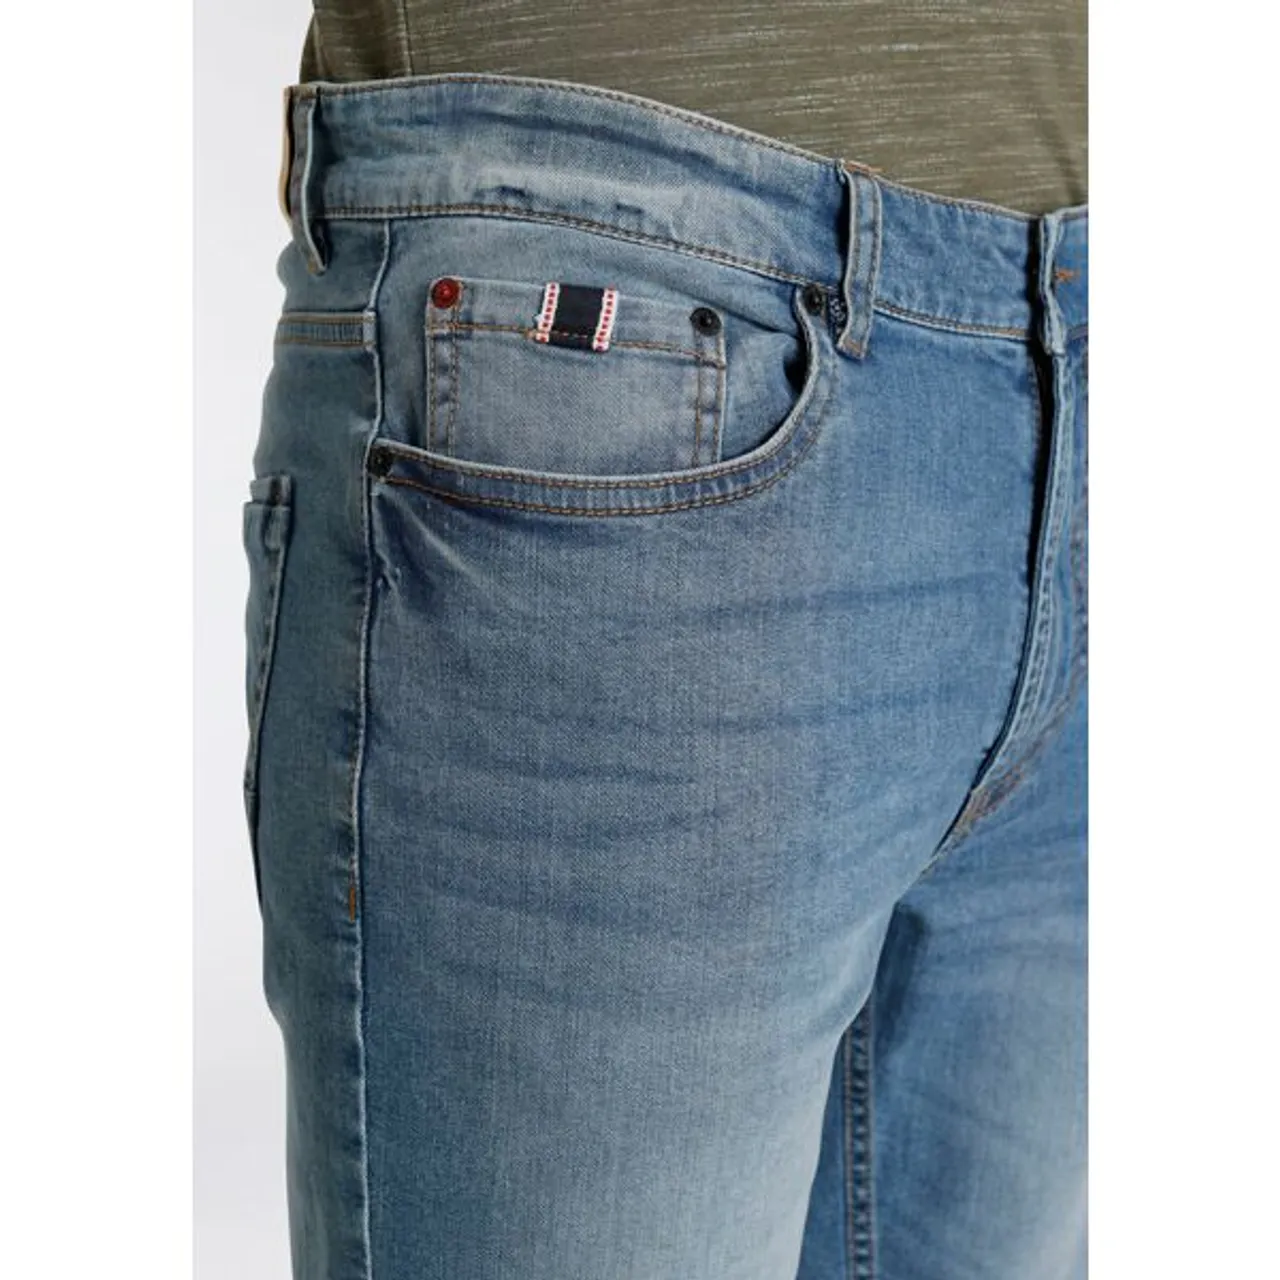 Jeansshorts H.I.S "DEYO" Gr. 30, N-Gr, blau (light blue) Herren Jeans Shorts wassersparende Produktion durch OZON WASH